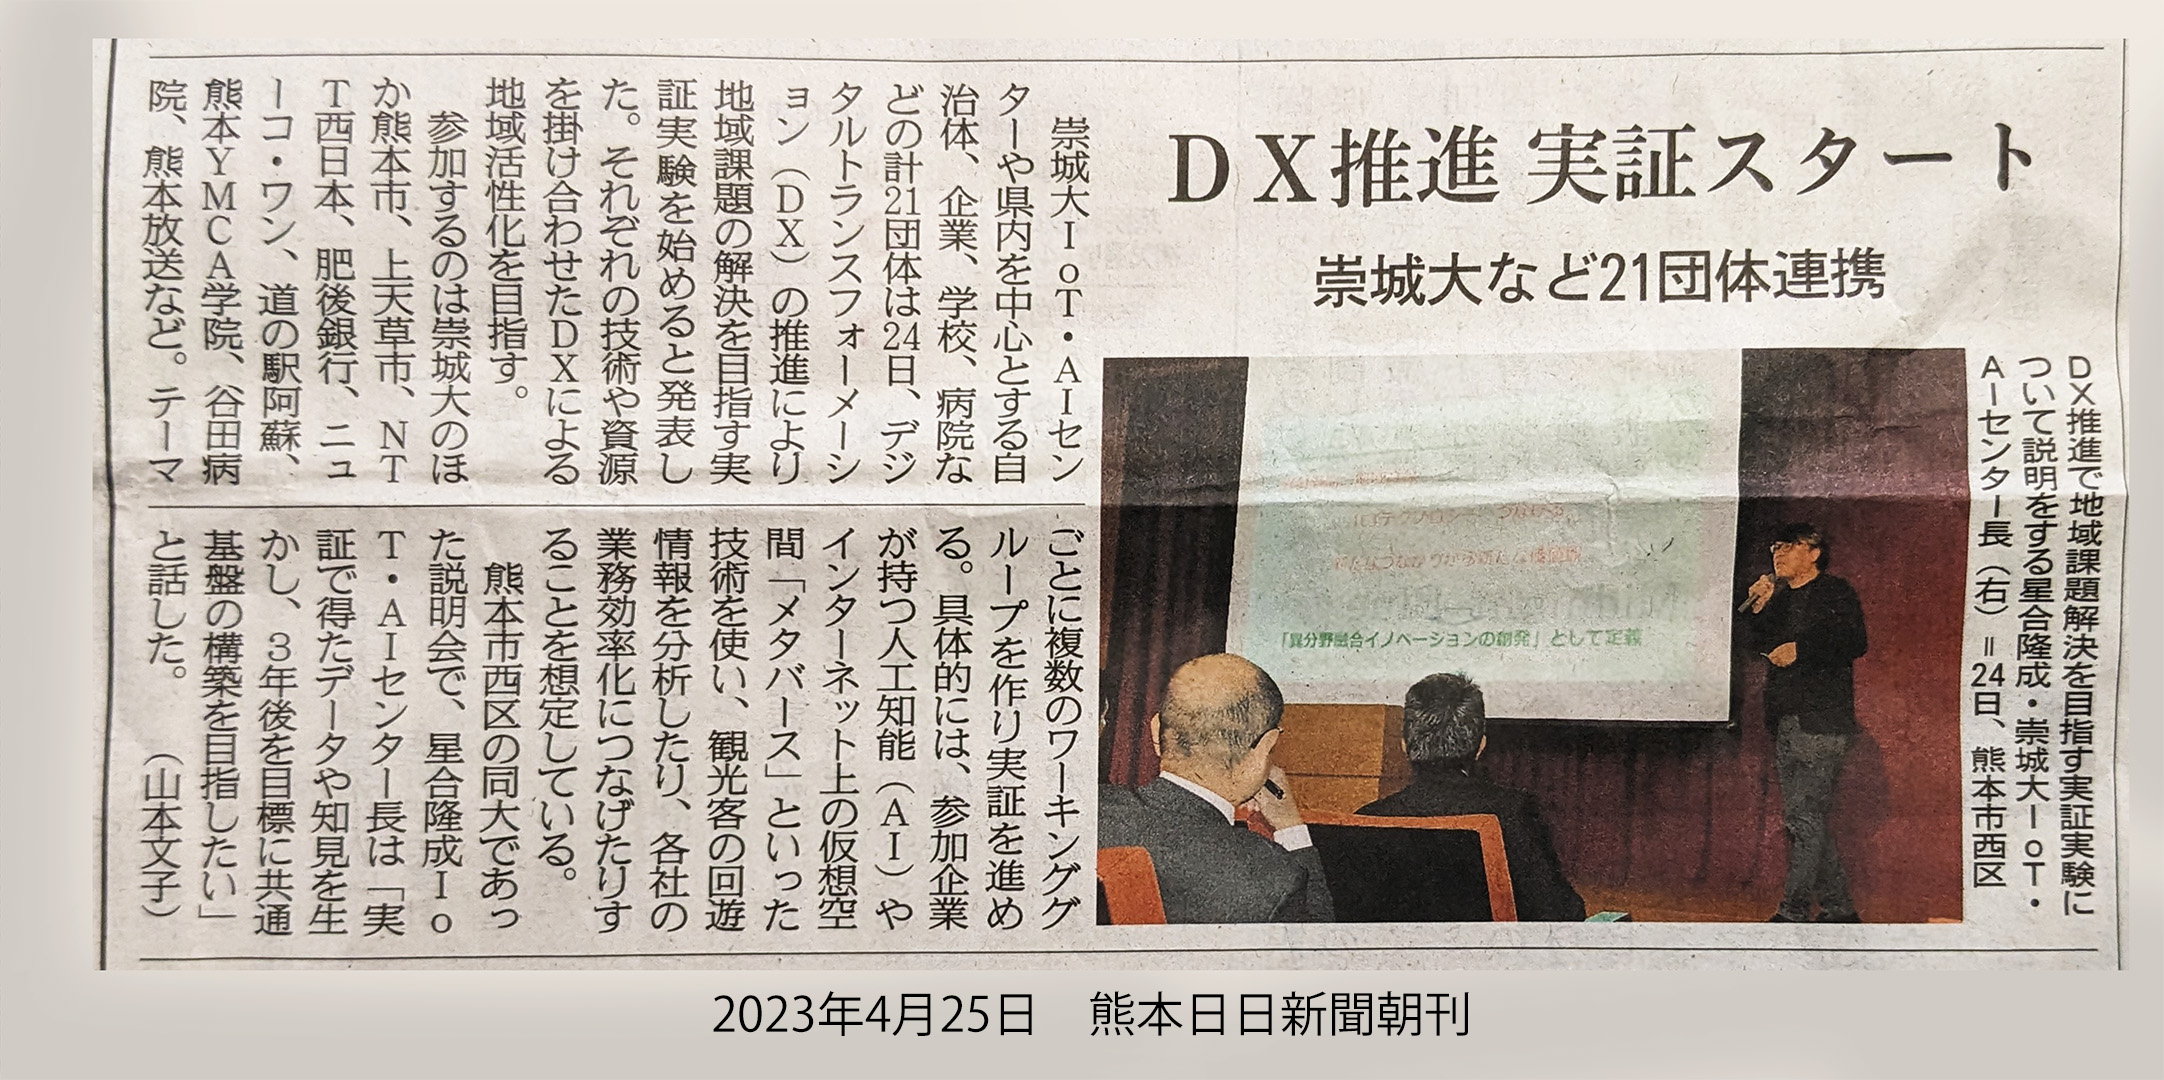 DX実証実験記者発表 230425 熊本日日新聞朝刊2